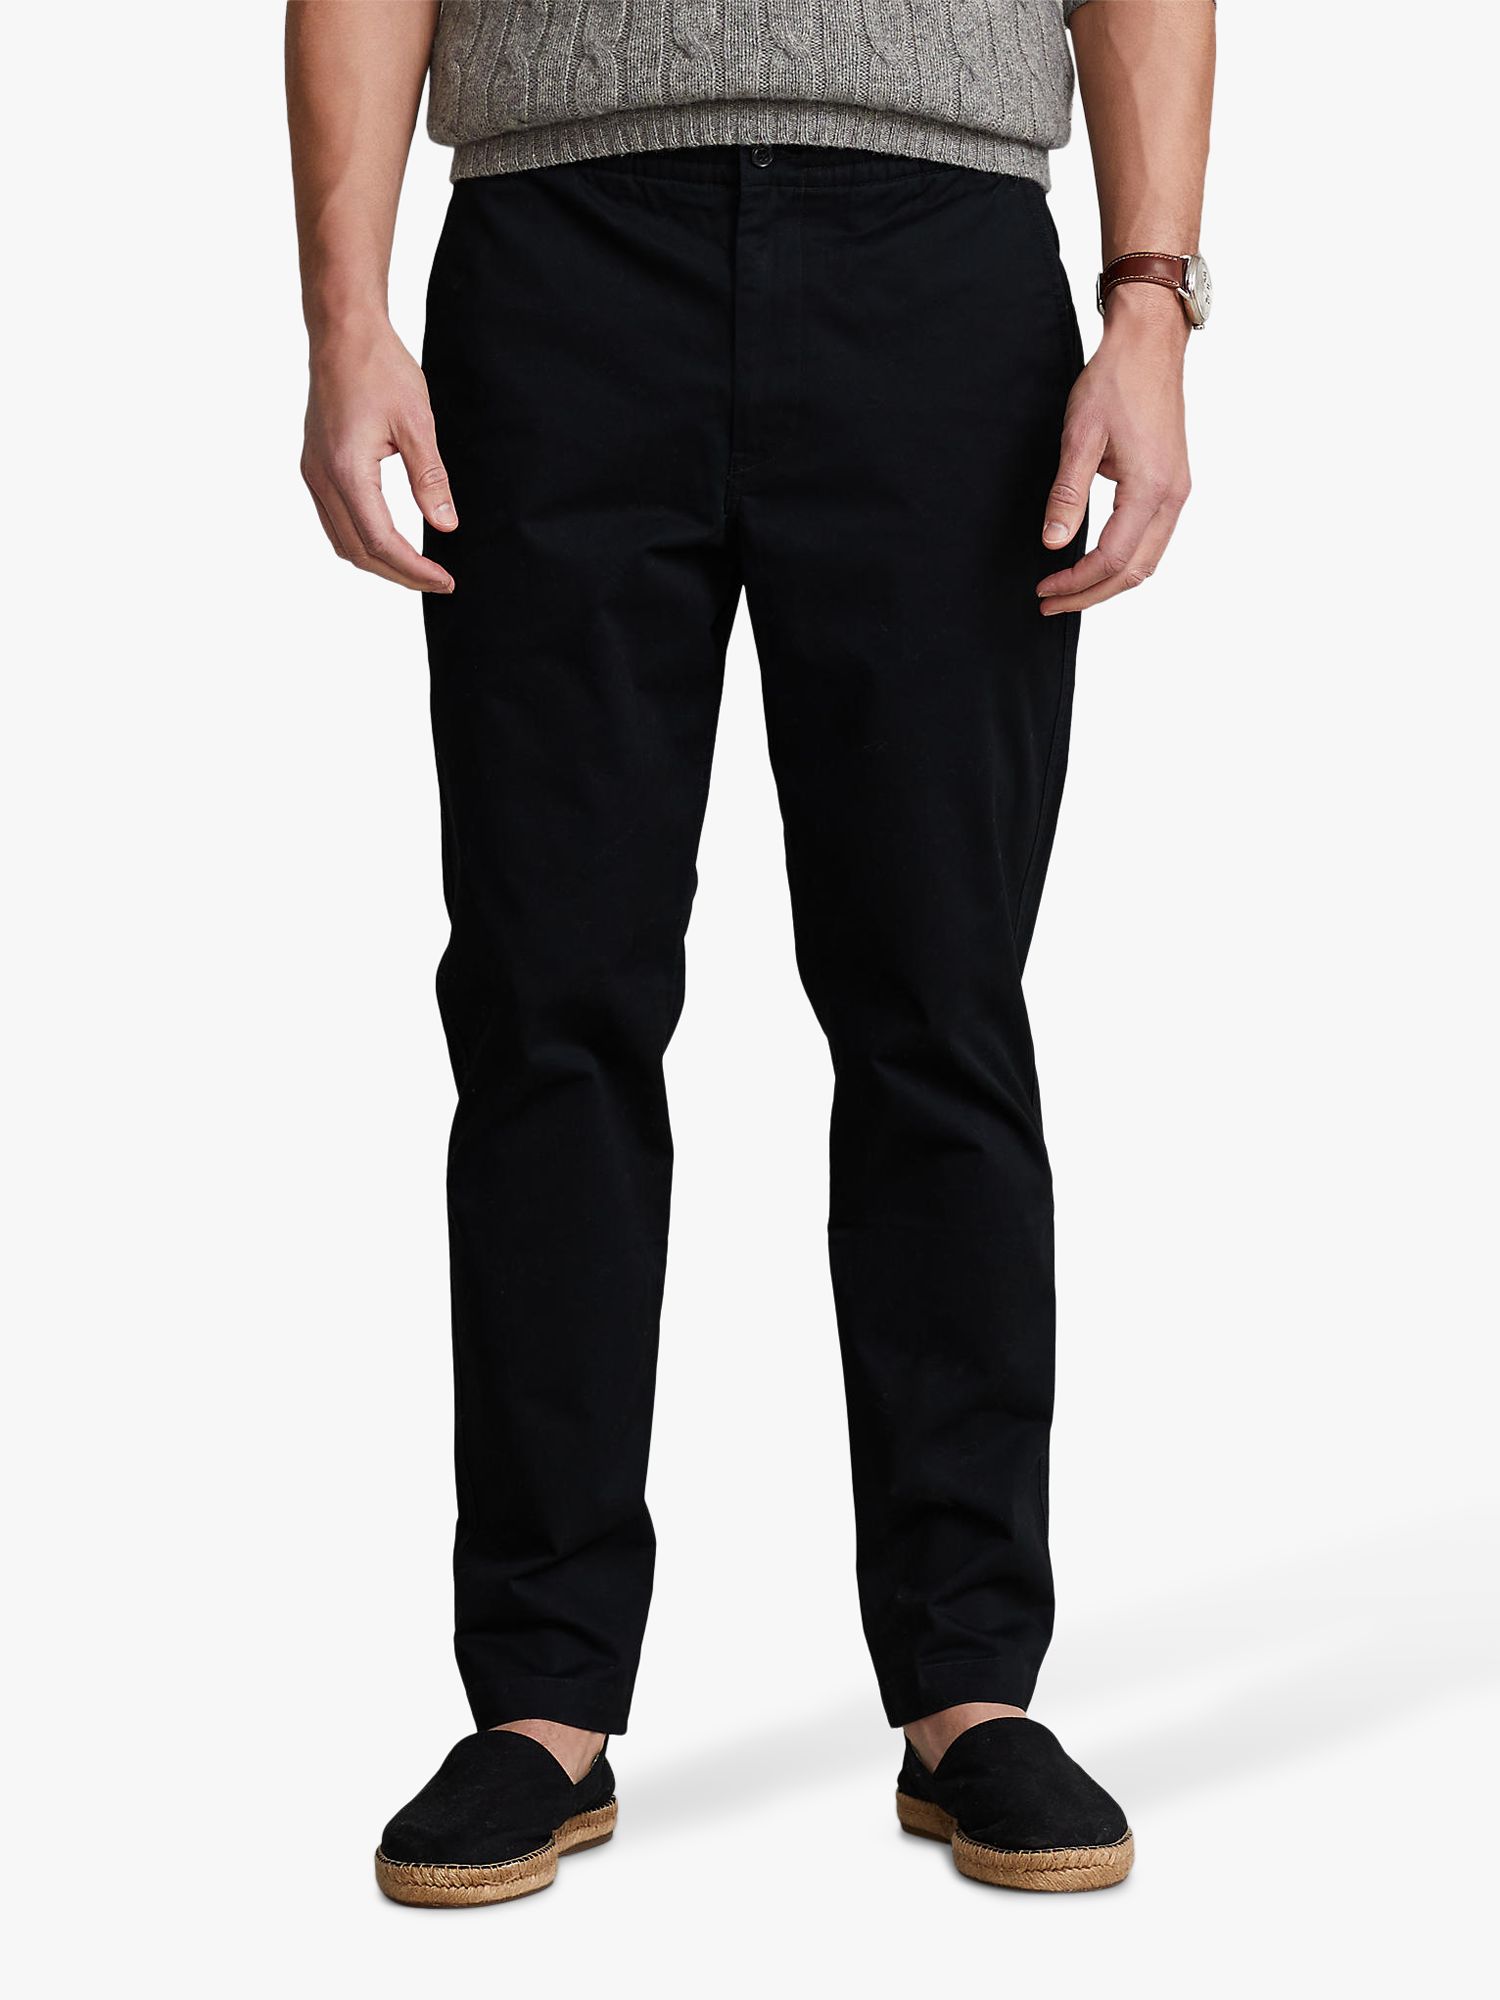 Polo Ralph Lauren Prepster Trousers, Black at John Lewis & Partners